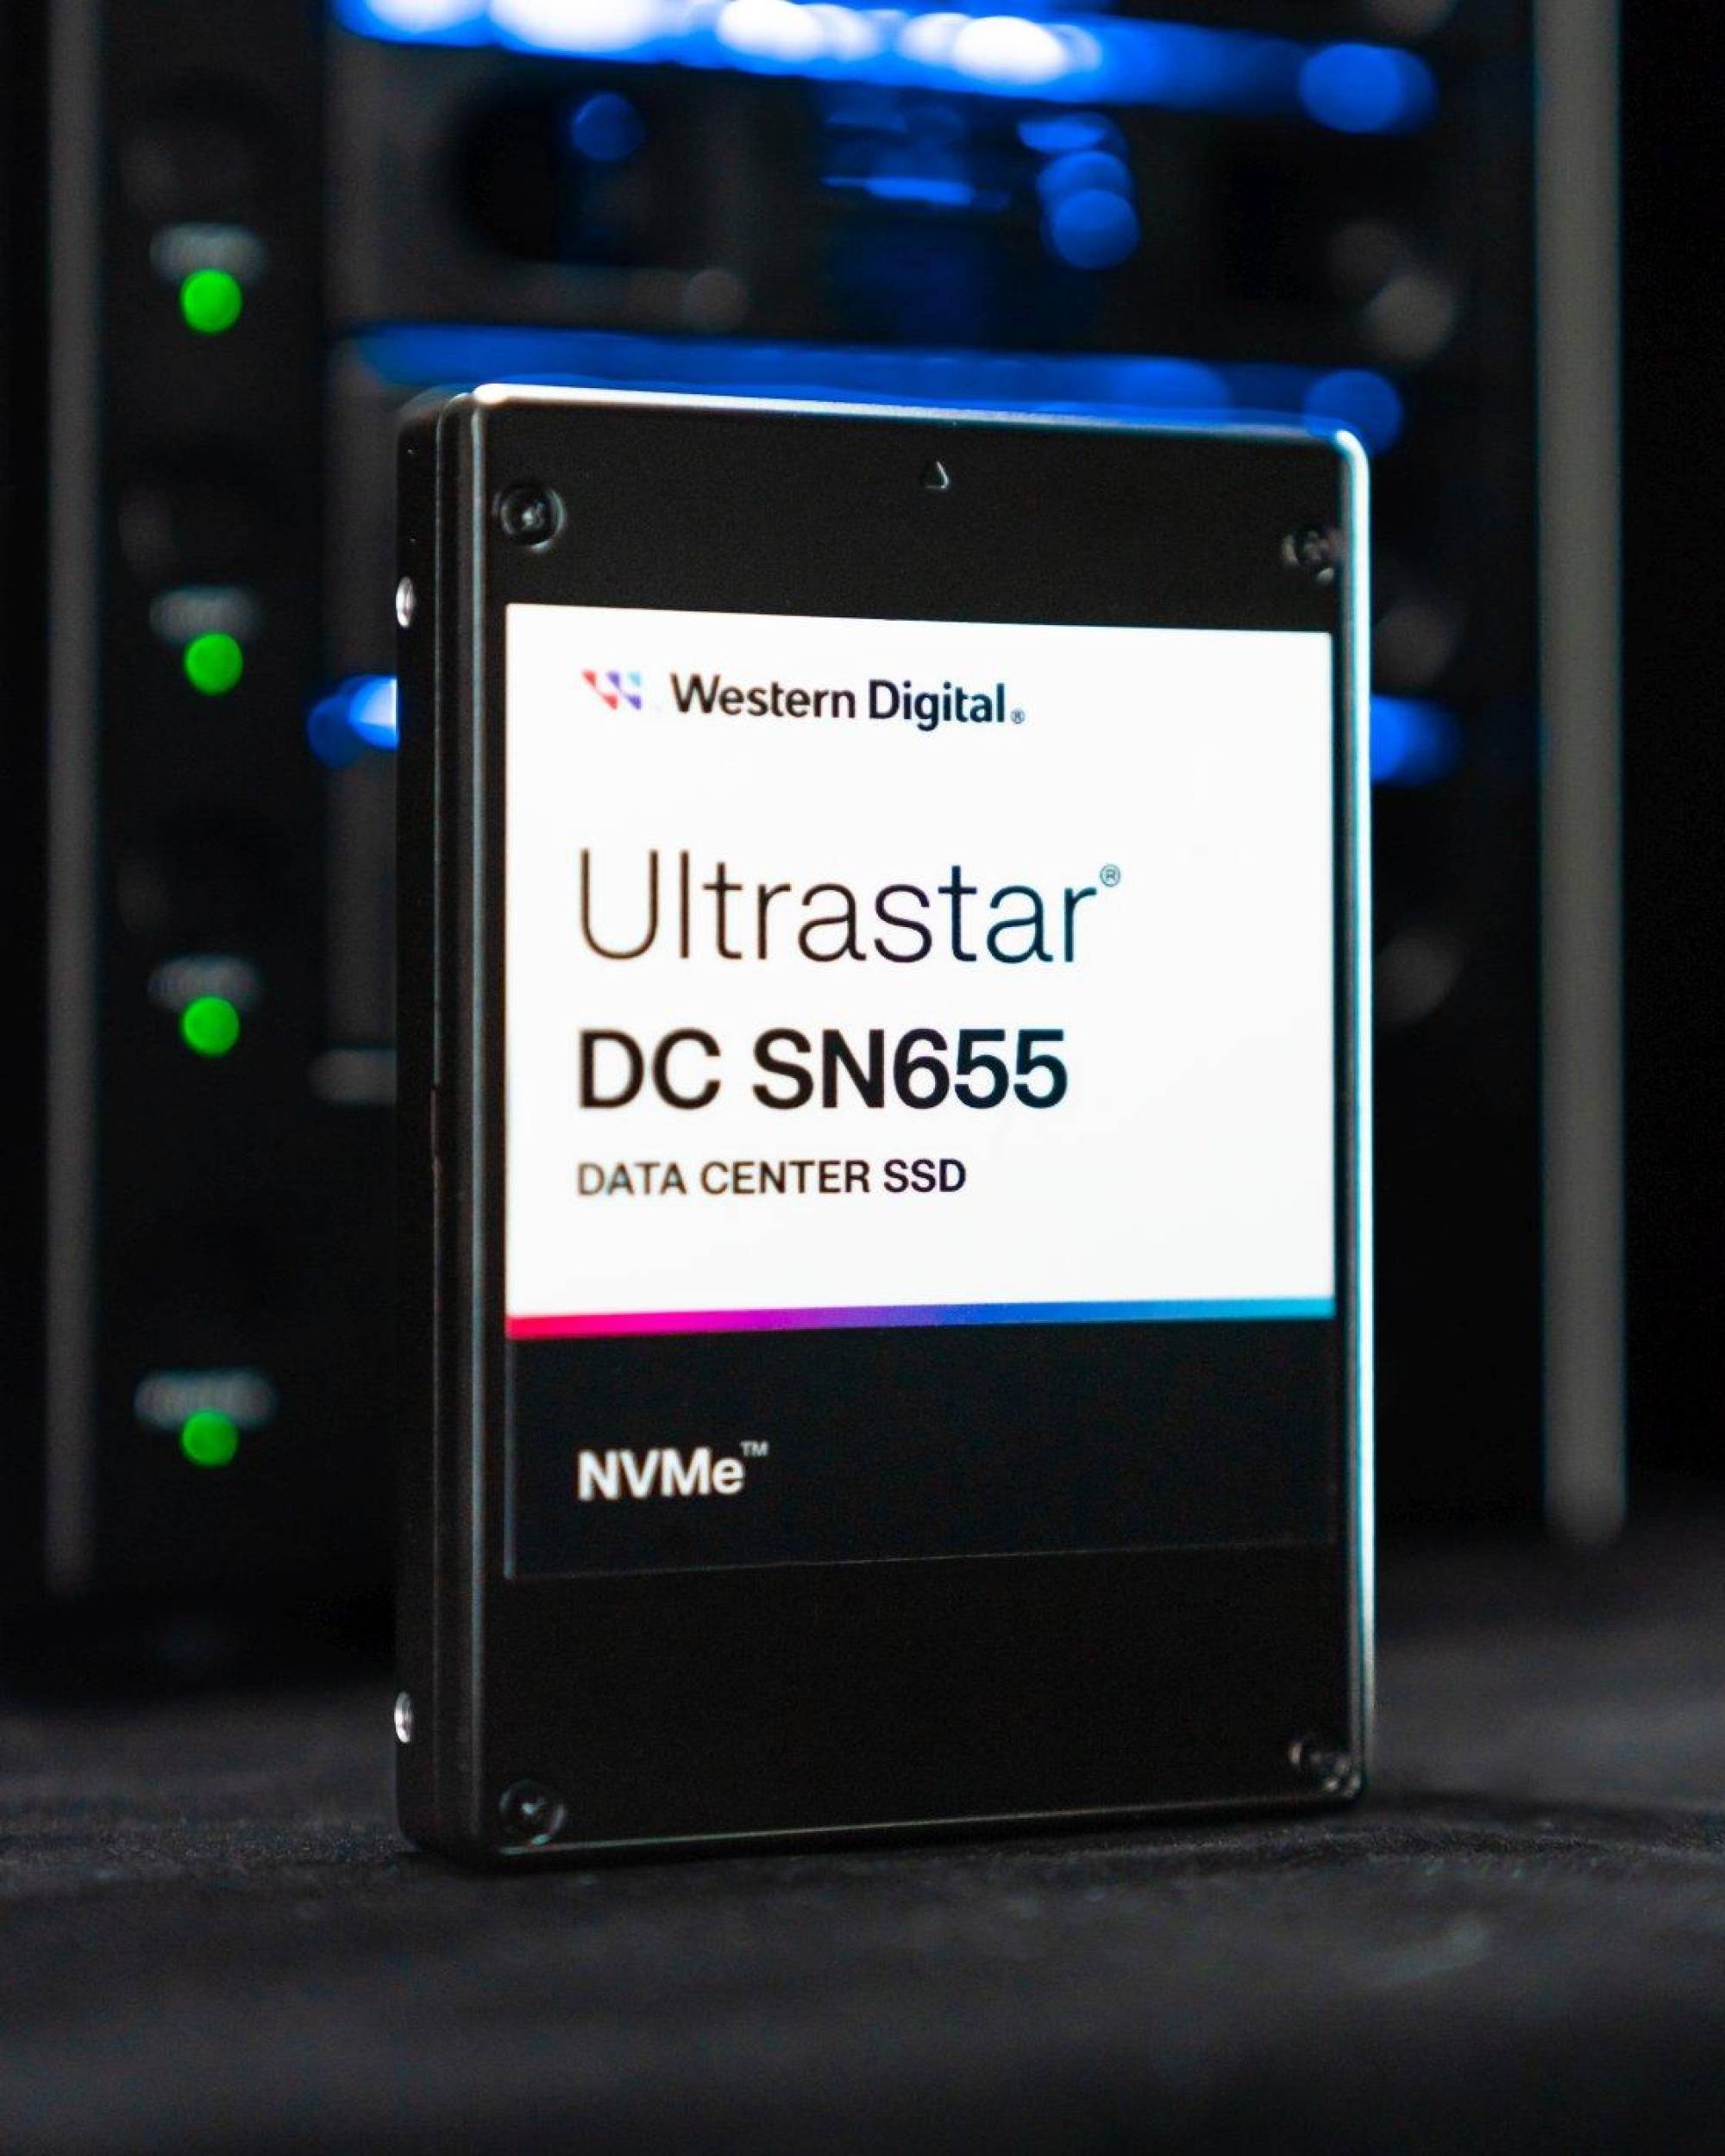 Western Digital Utrastar DC SN655 е модерен корпоративен SSD без недостатъци